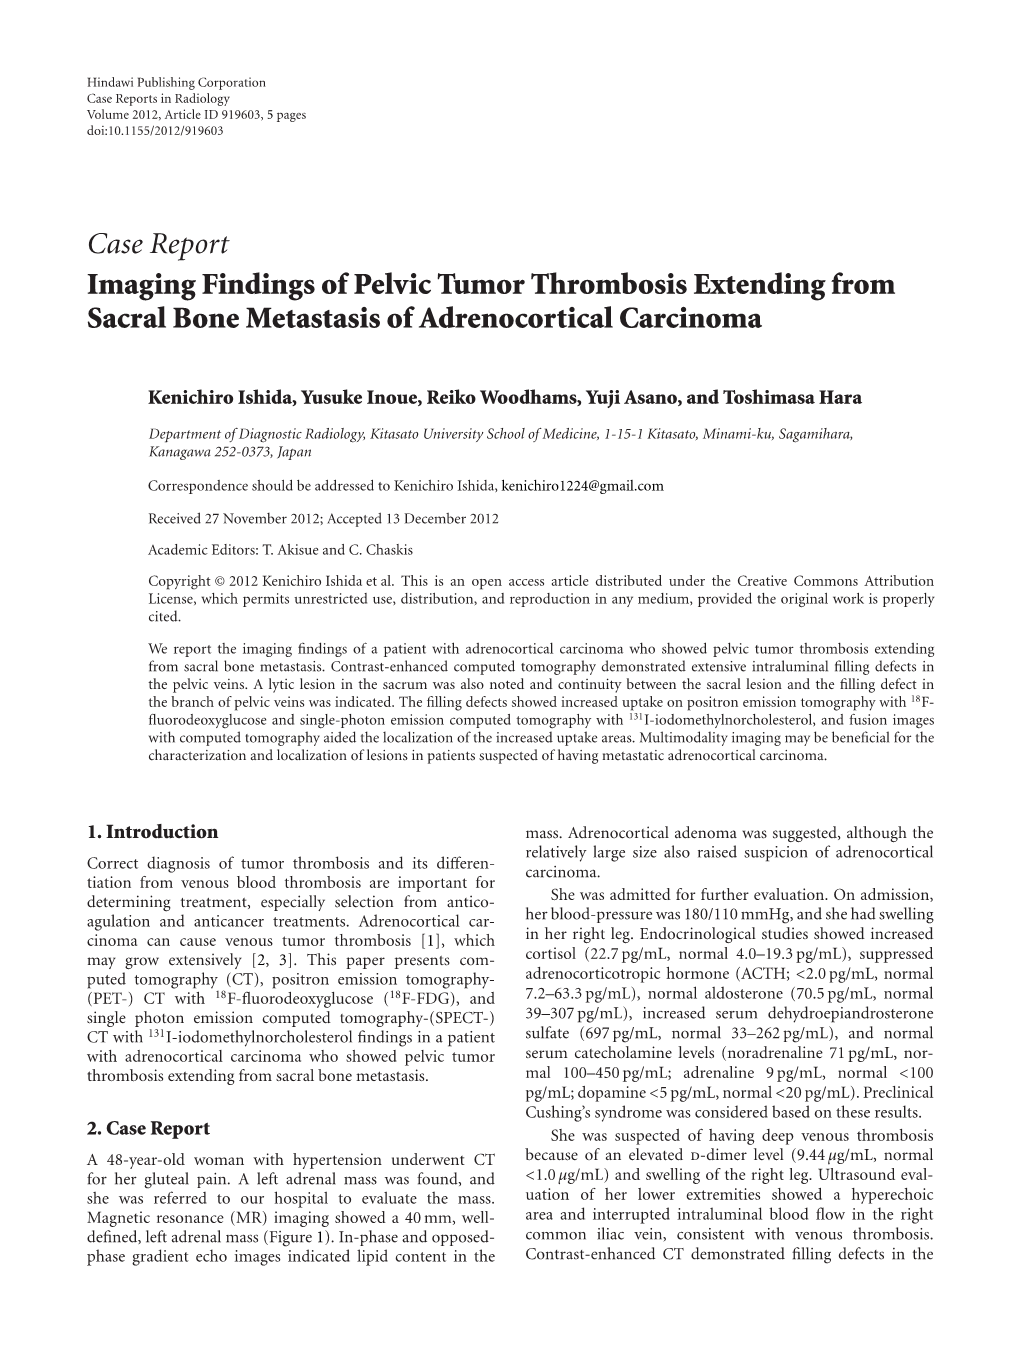 Case Report Imaging Findings of Pelvic Tumor Thrombosis Extending from Sacral Bone Metastasis of Adrenocortical Carcinoma